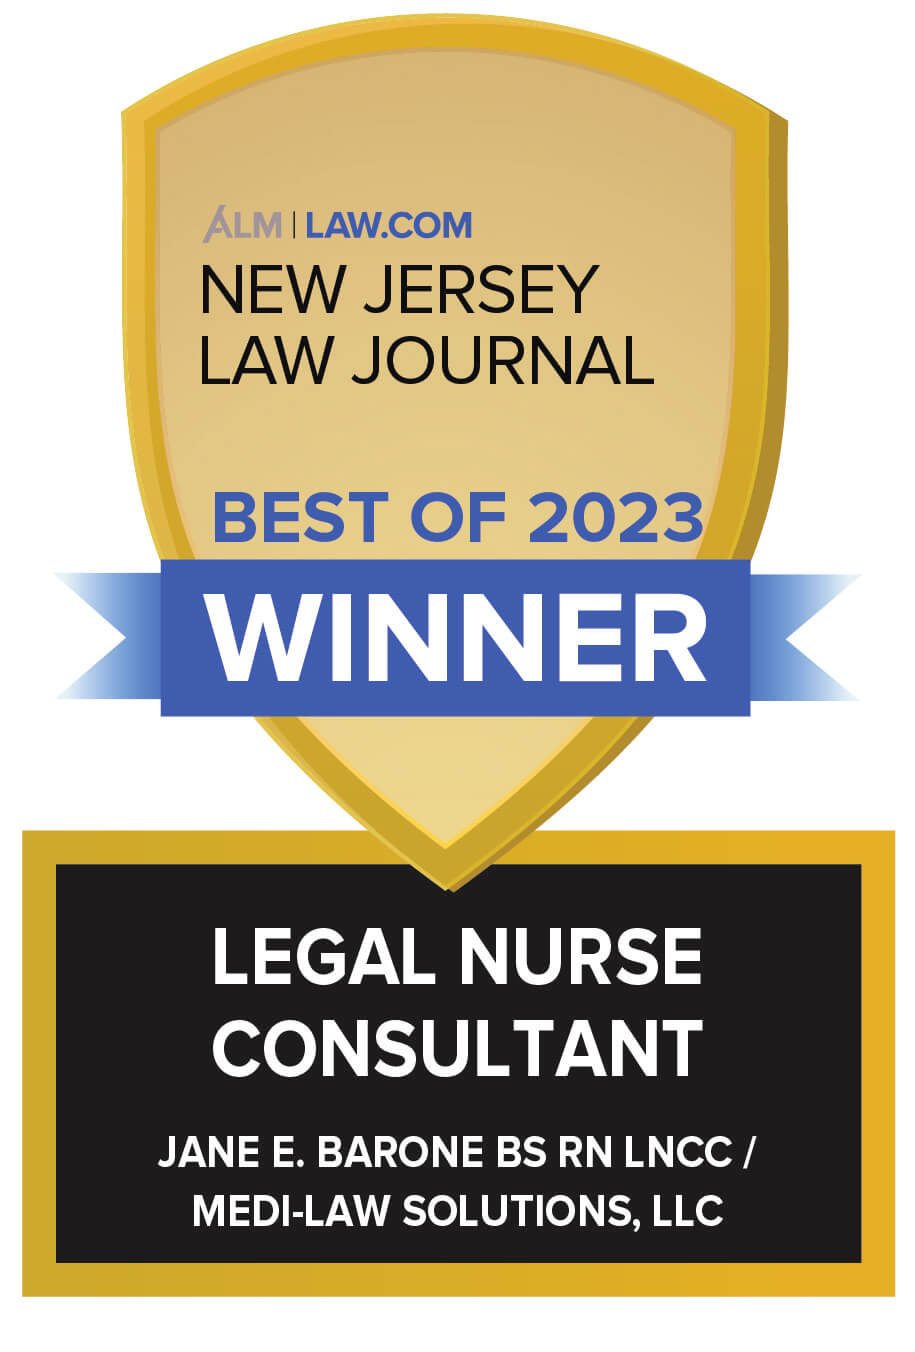 Medi-Law_Legal Nurse Consultant Winner Jane E. Barone BS RN LNCC  Medi-Law Solutions, LLC_WINNER.jpg